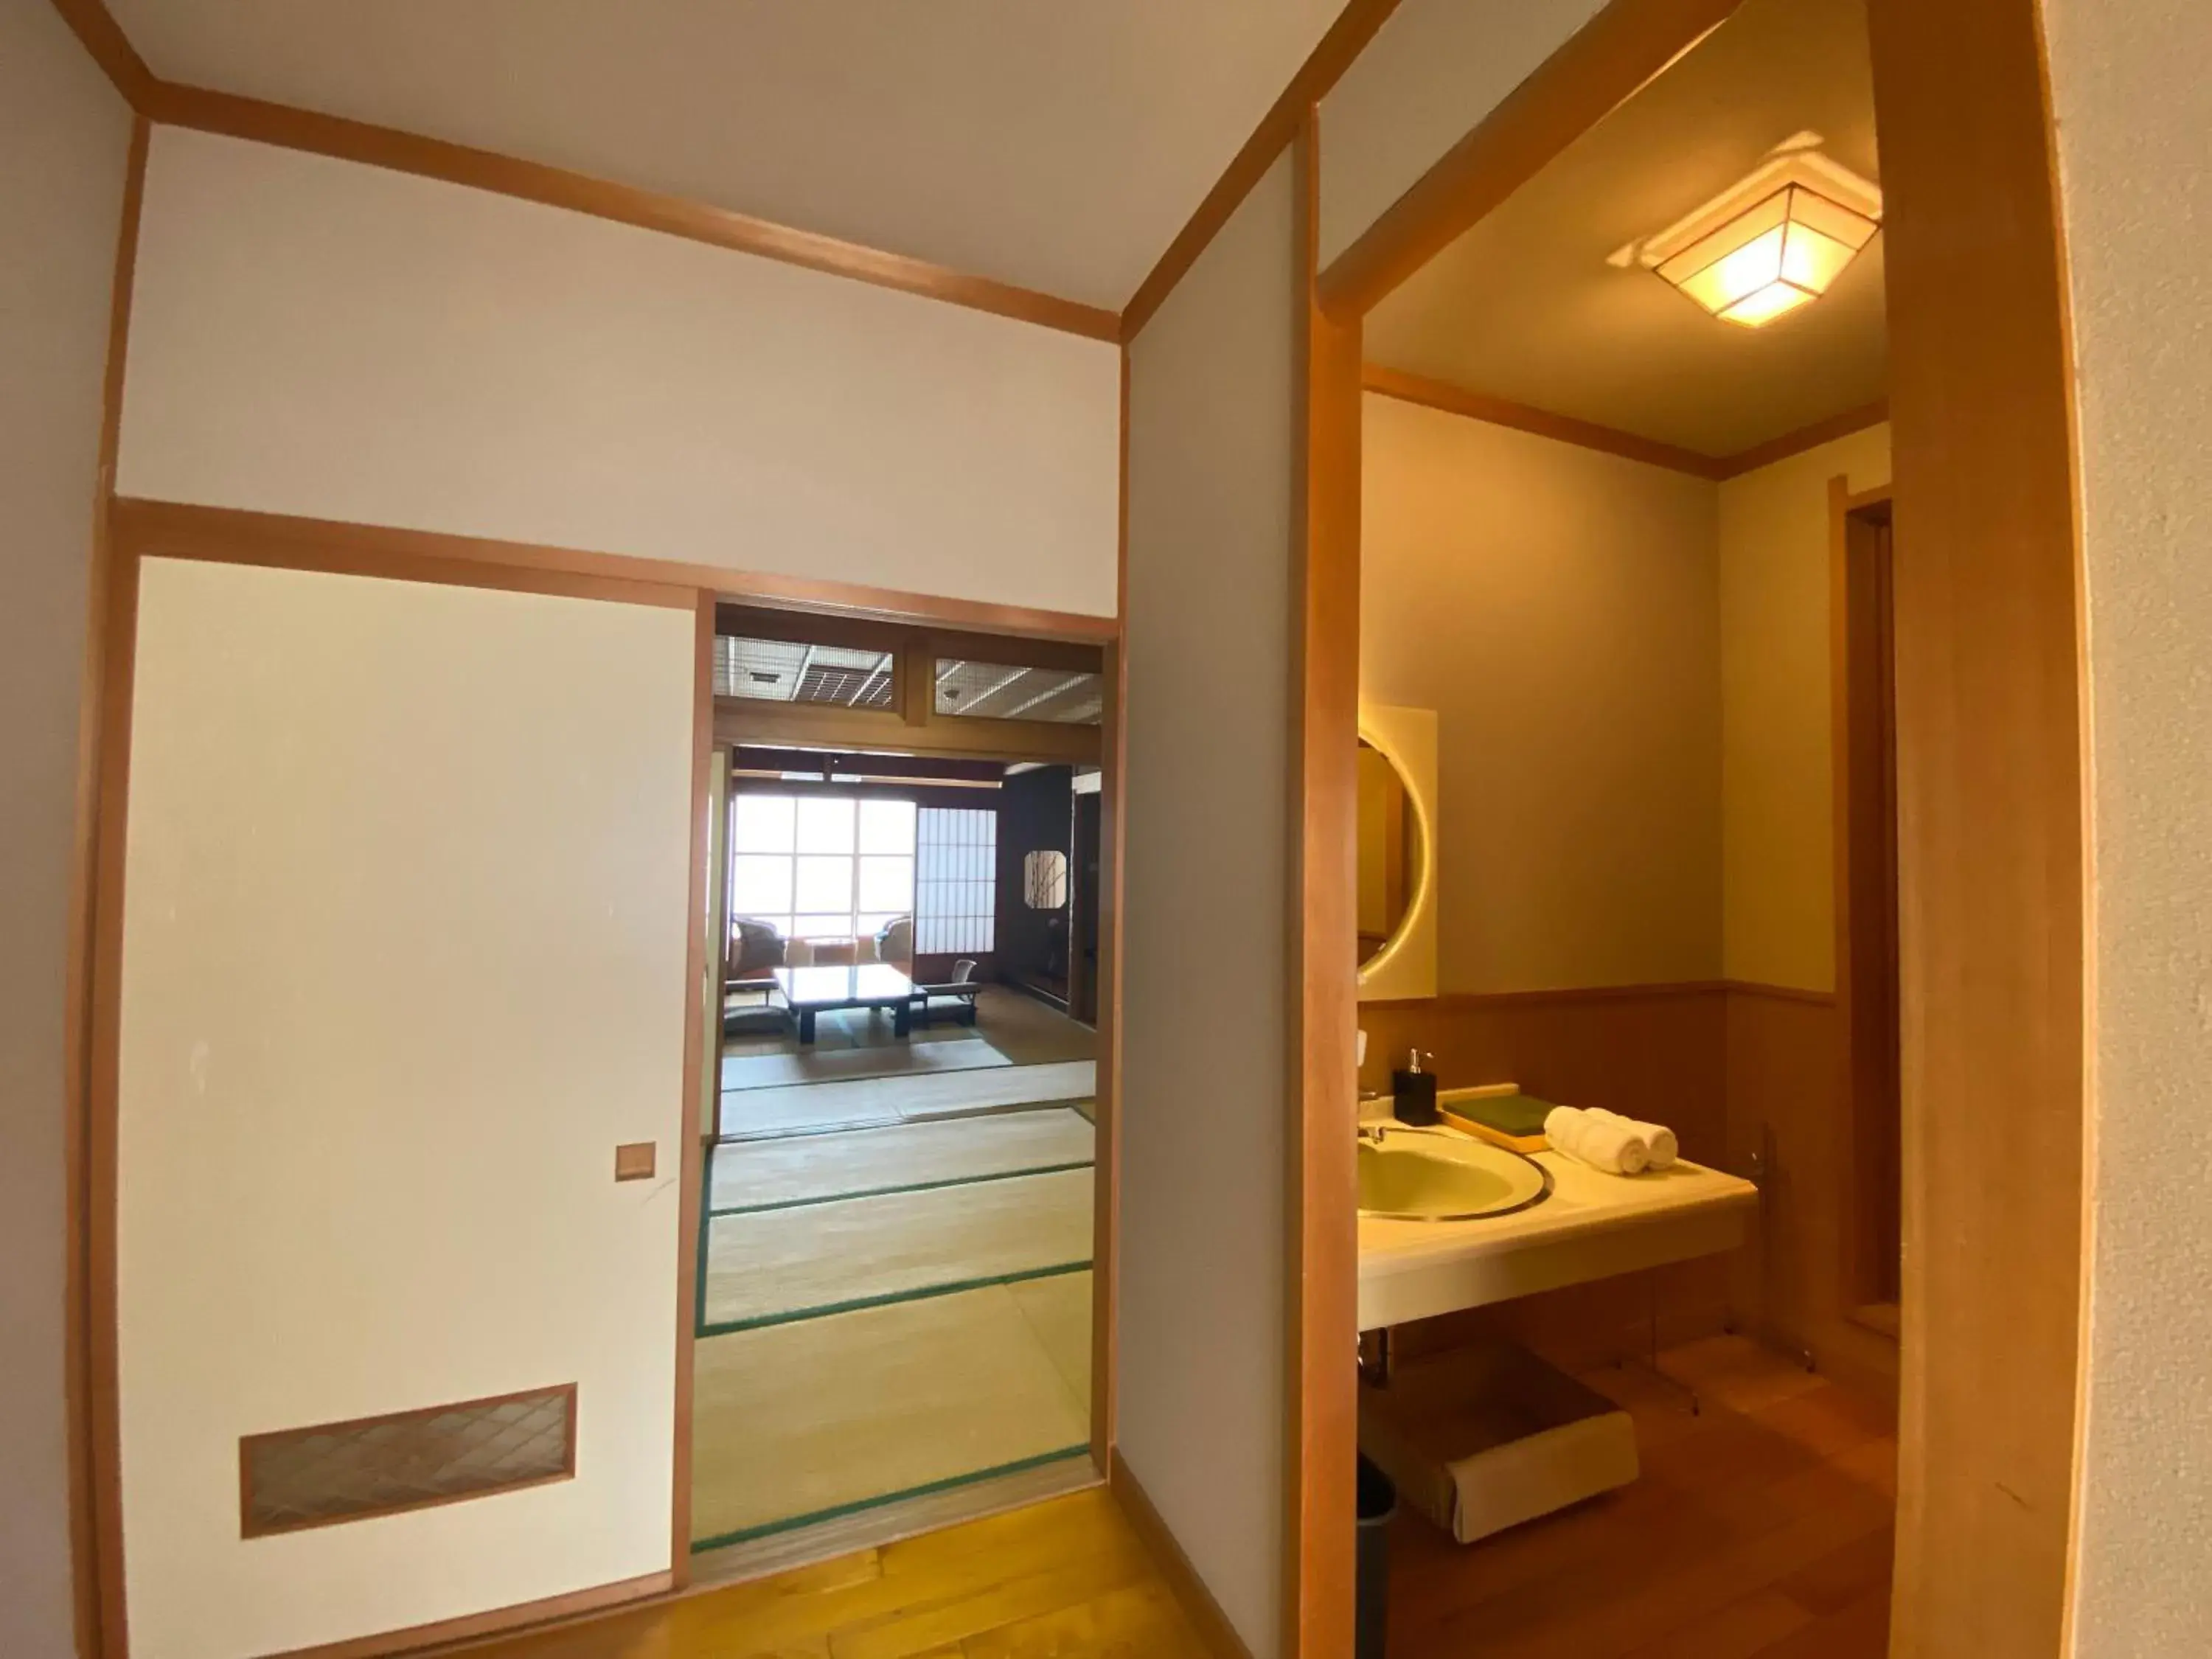 Photo of the whole room, Bathroom in Wakamatsu Hot Spring Resort